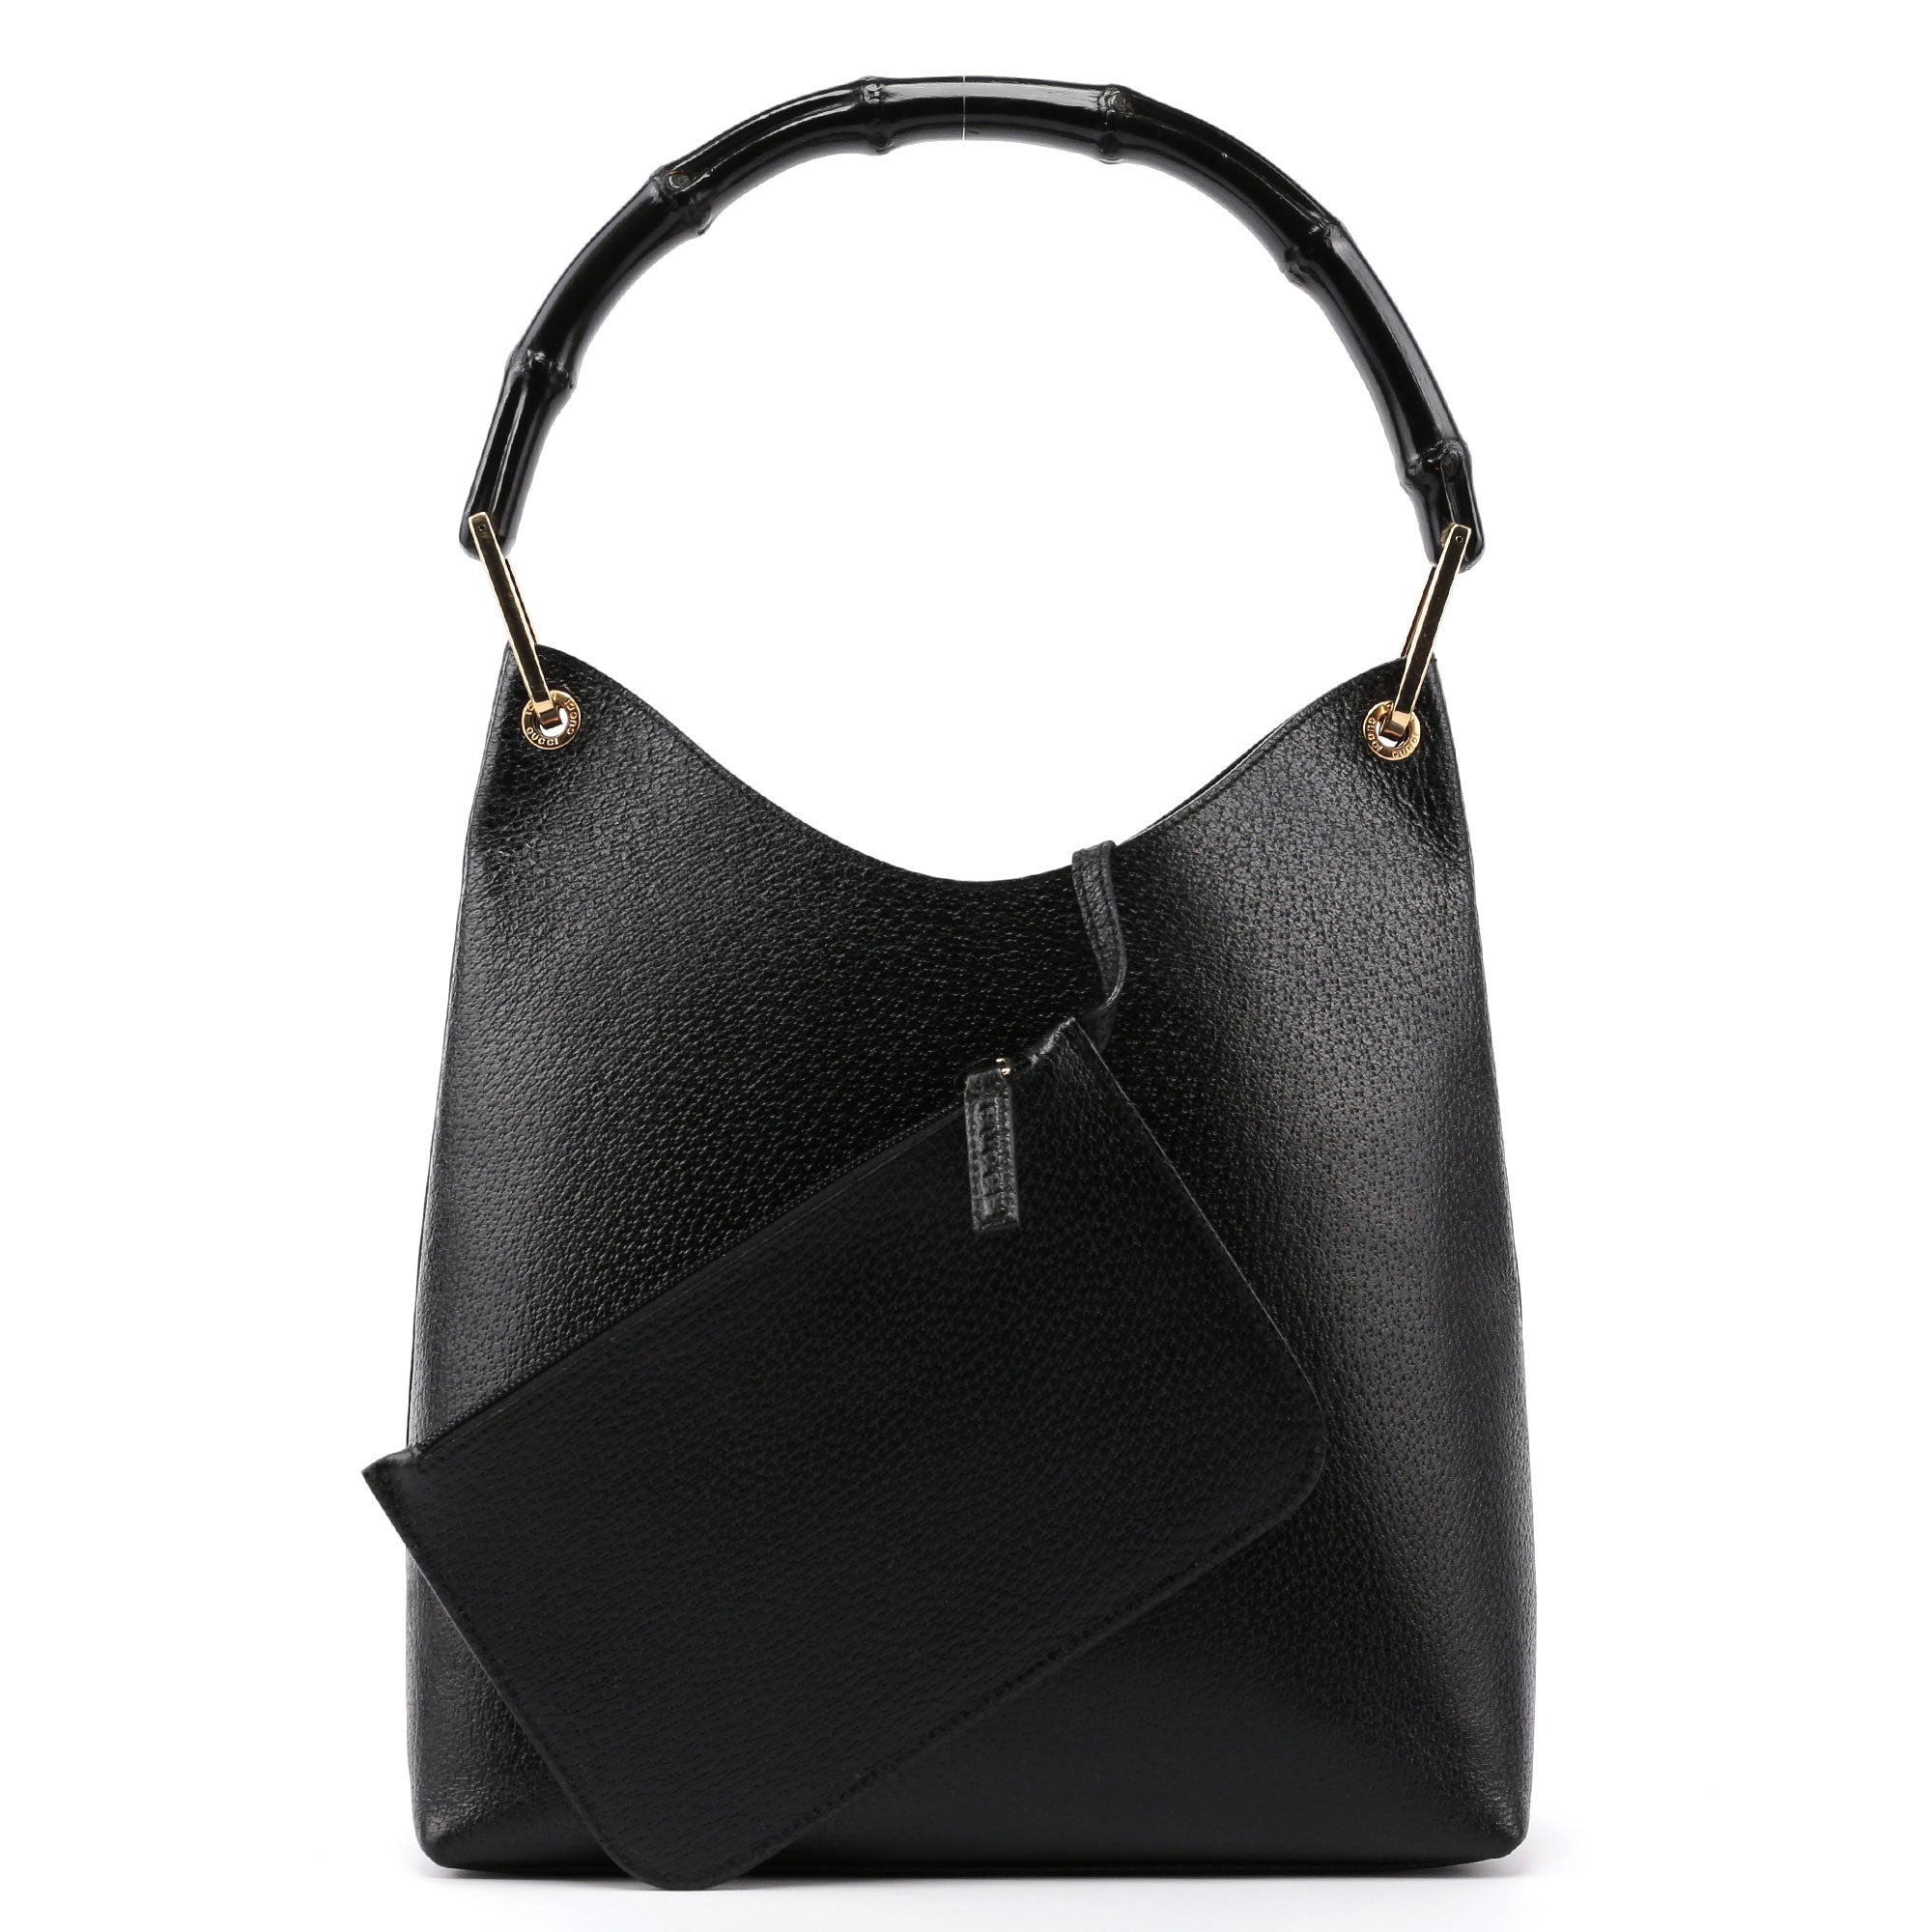 Gucci Black Textured Leather Bamboo Shoulder Bag